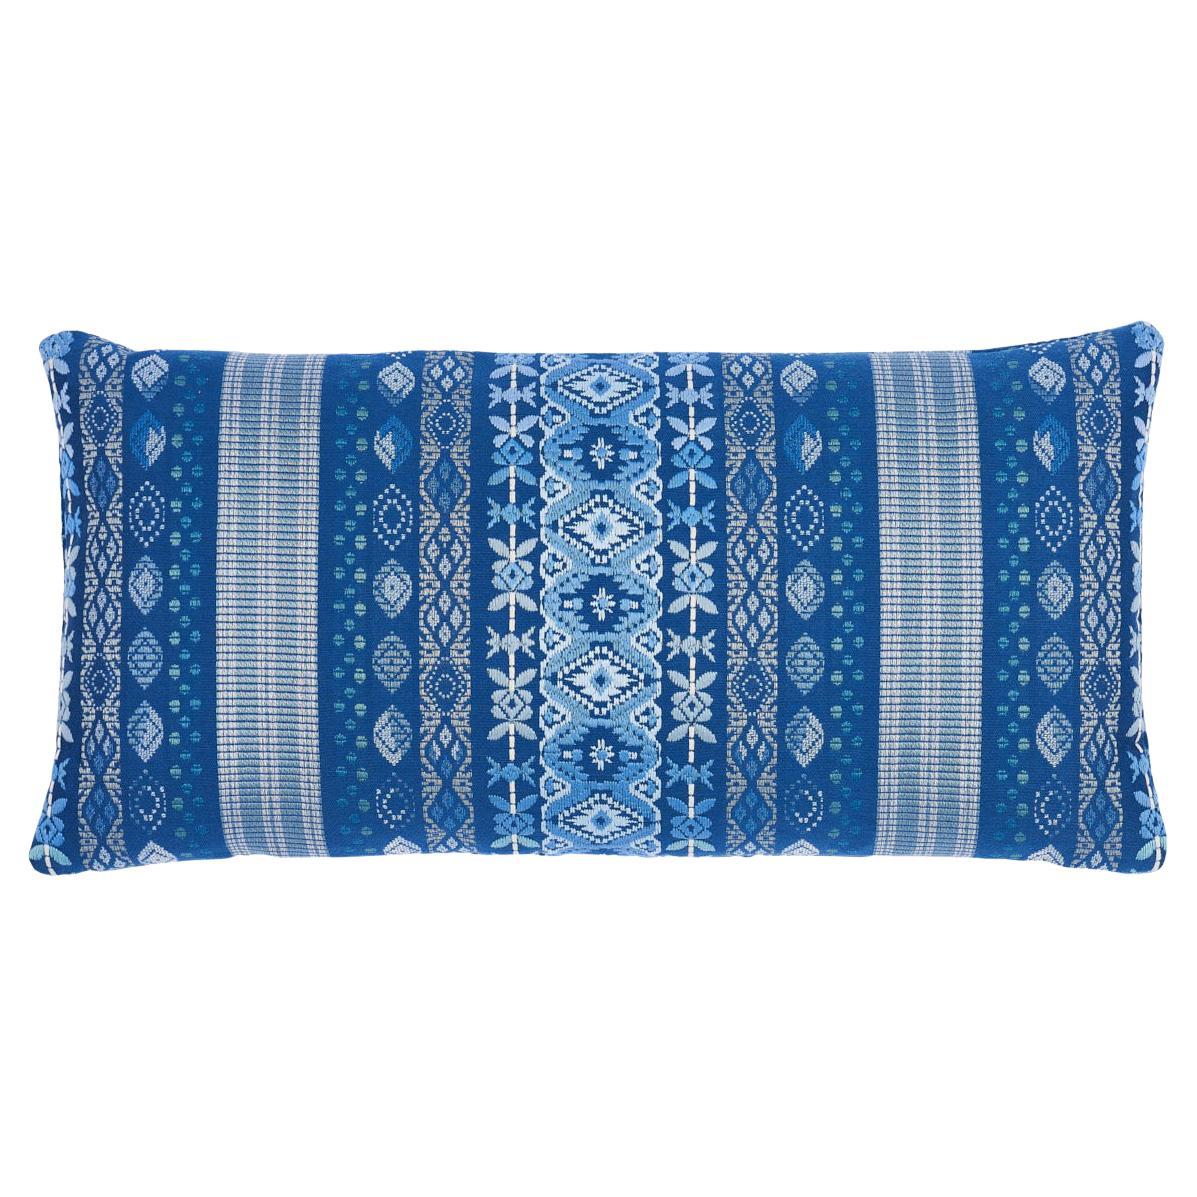 Schumacher Cosima 24" x 12" Embroidery Pillow in Blue Multi For Sale